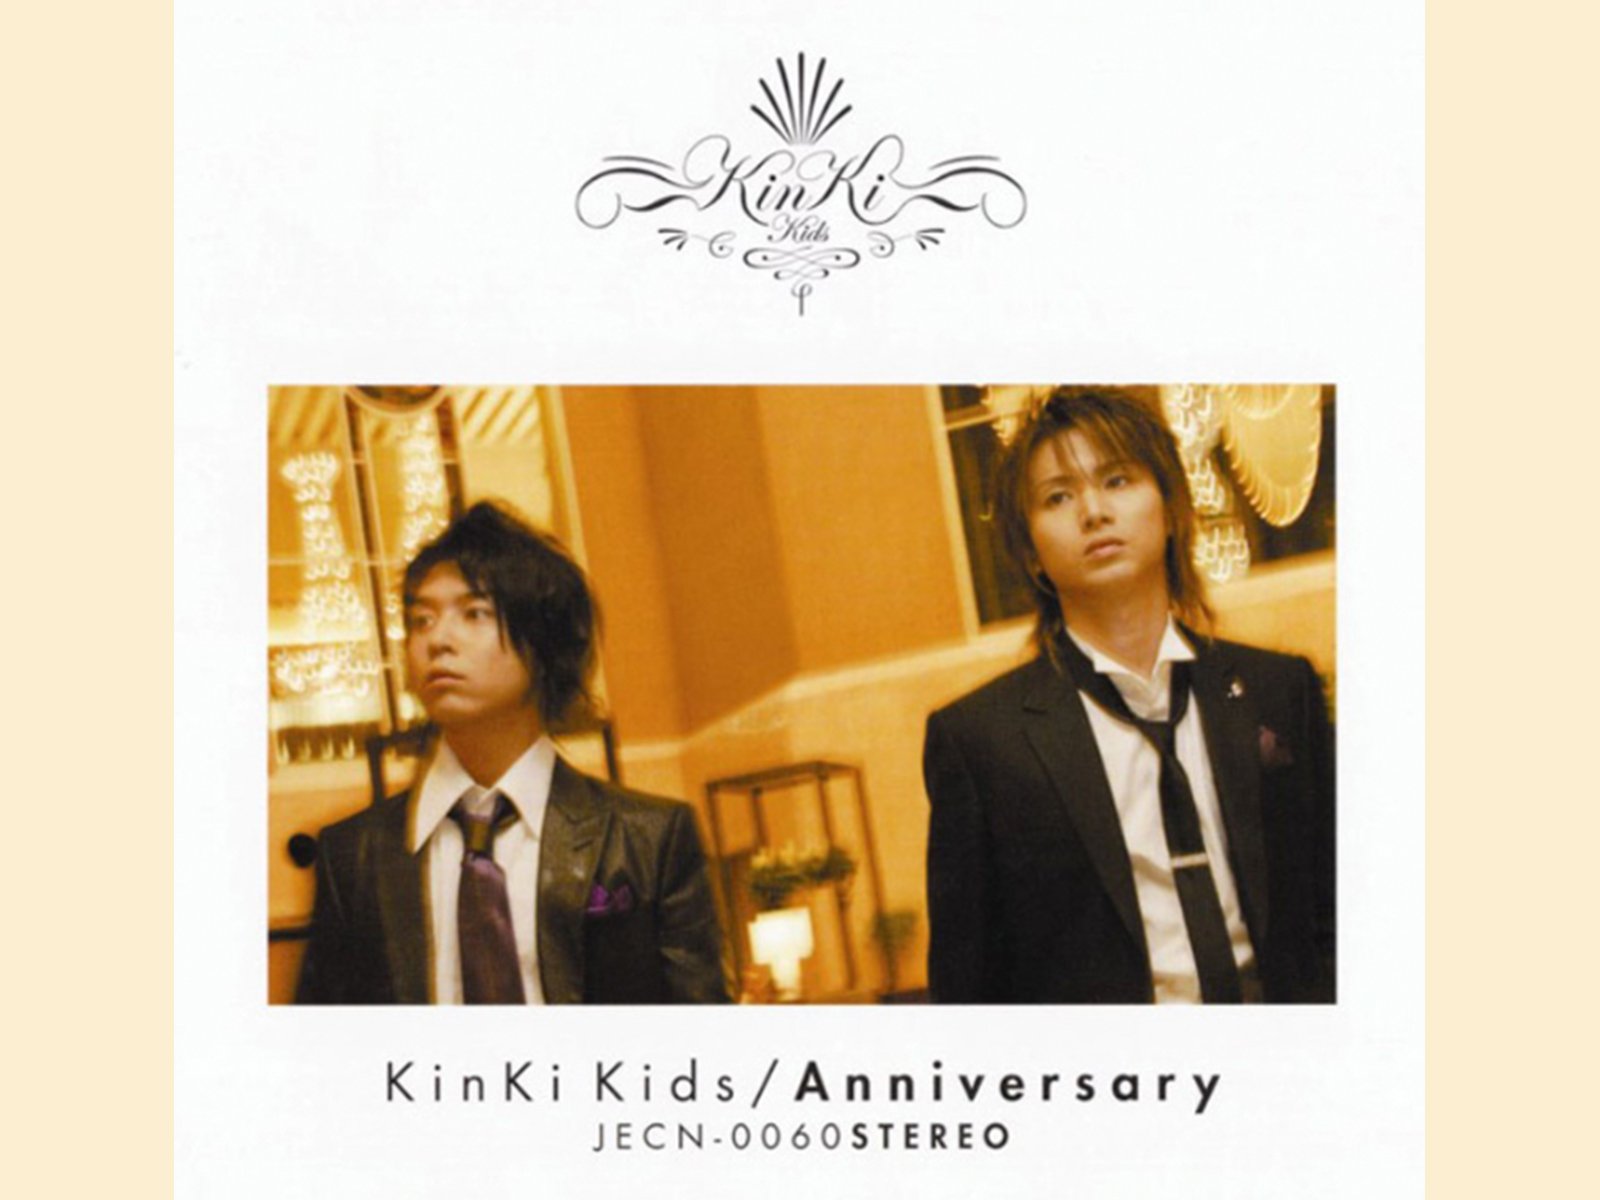 KinKi Kidsカラオケ人気曲ヒストリー【#2】名曲「愛のかたまり」が発売5年目で上昇、“打ちひしがれ事件”も懐古 – fumufumu news